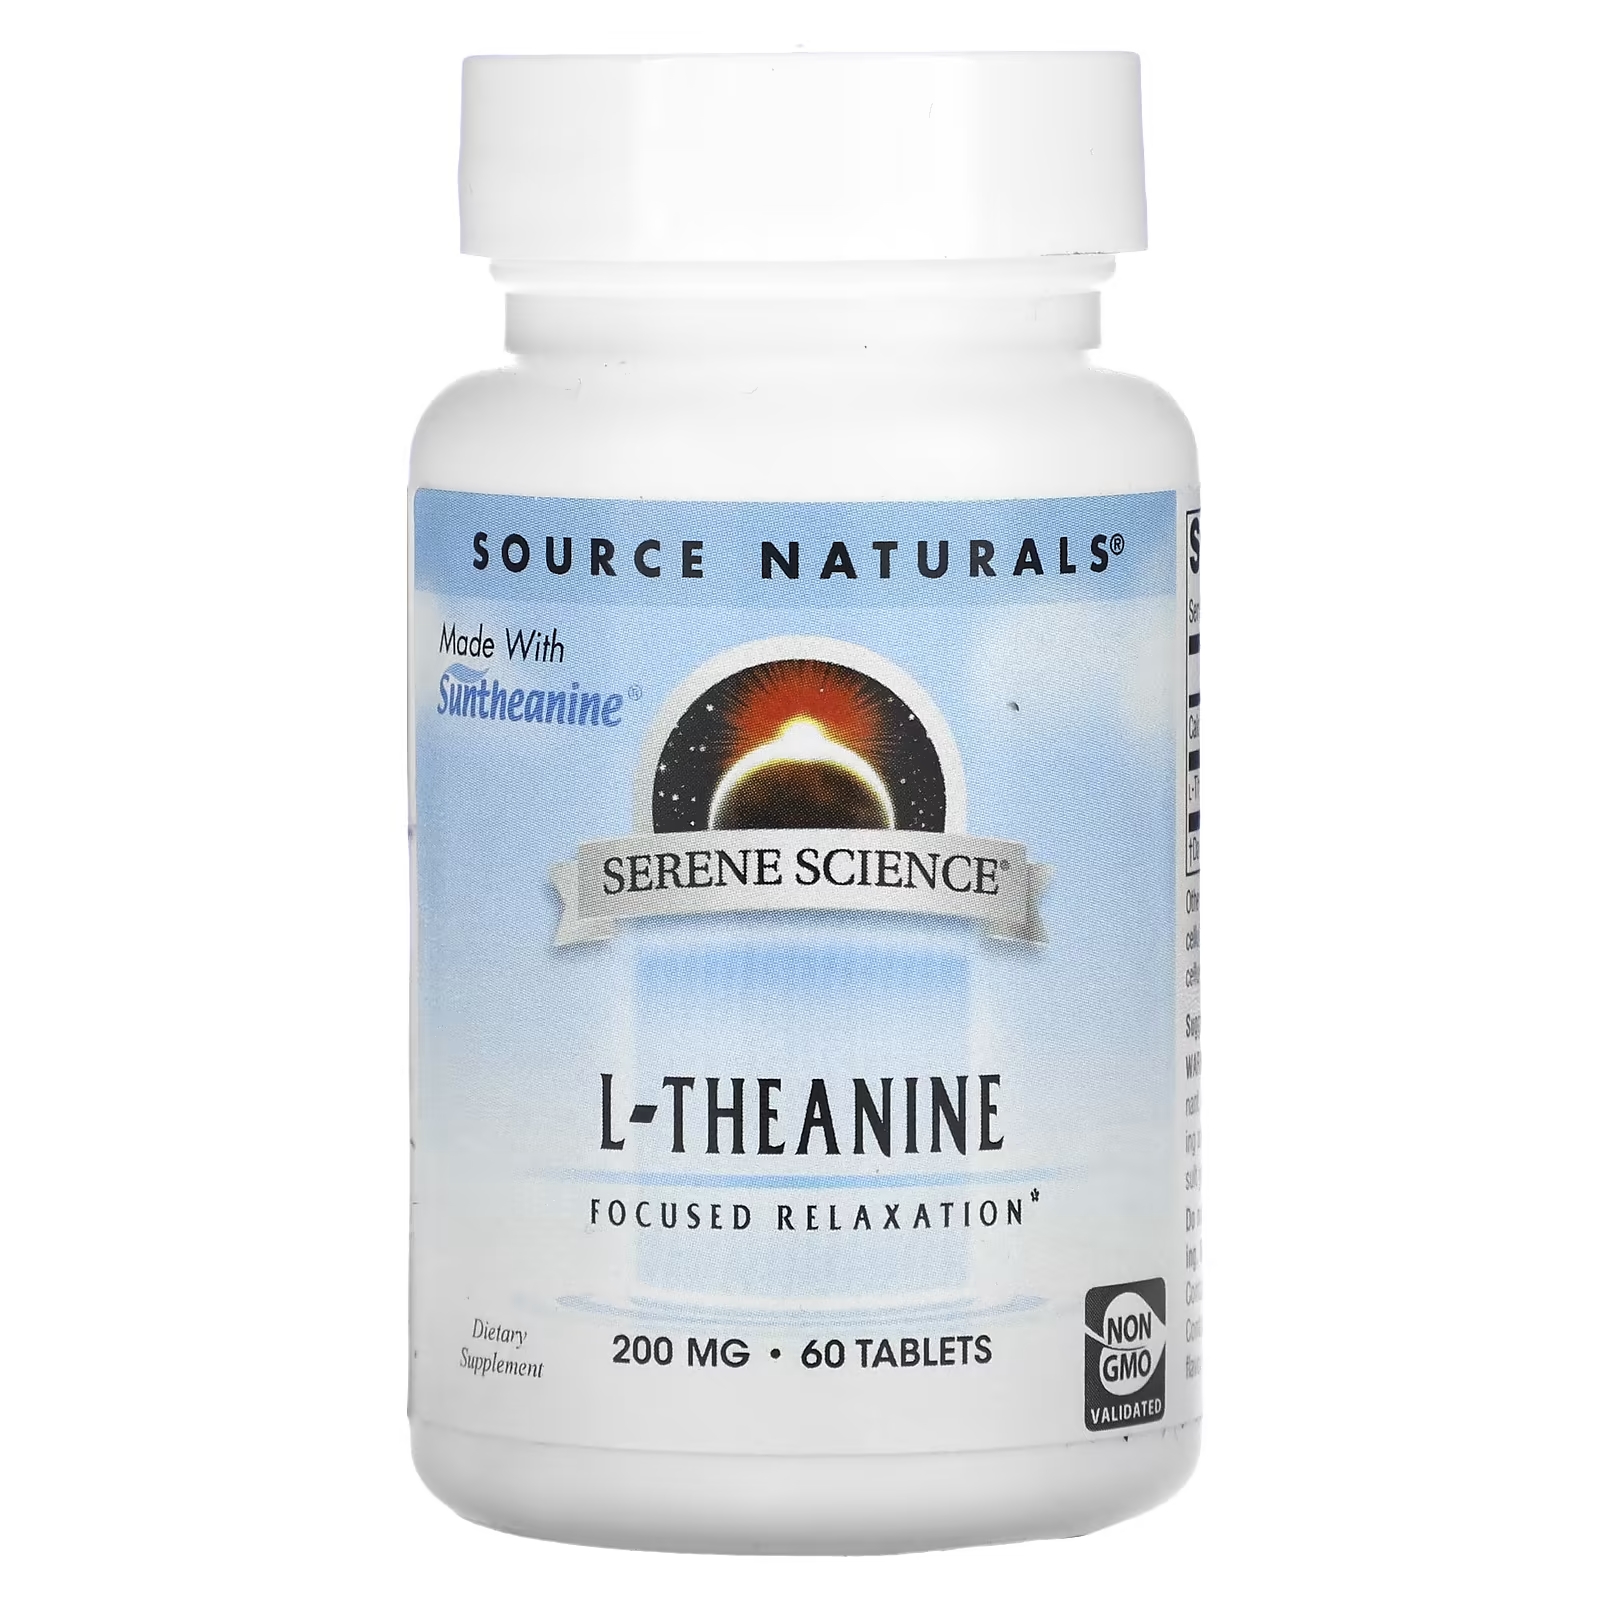 source naturals serene science l теанин 200 мг 60 капсул Source Naturals L-теанин 200 мг, 60 таблеток